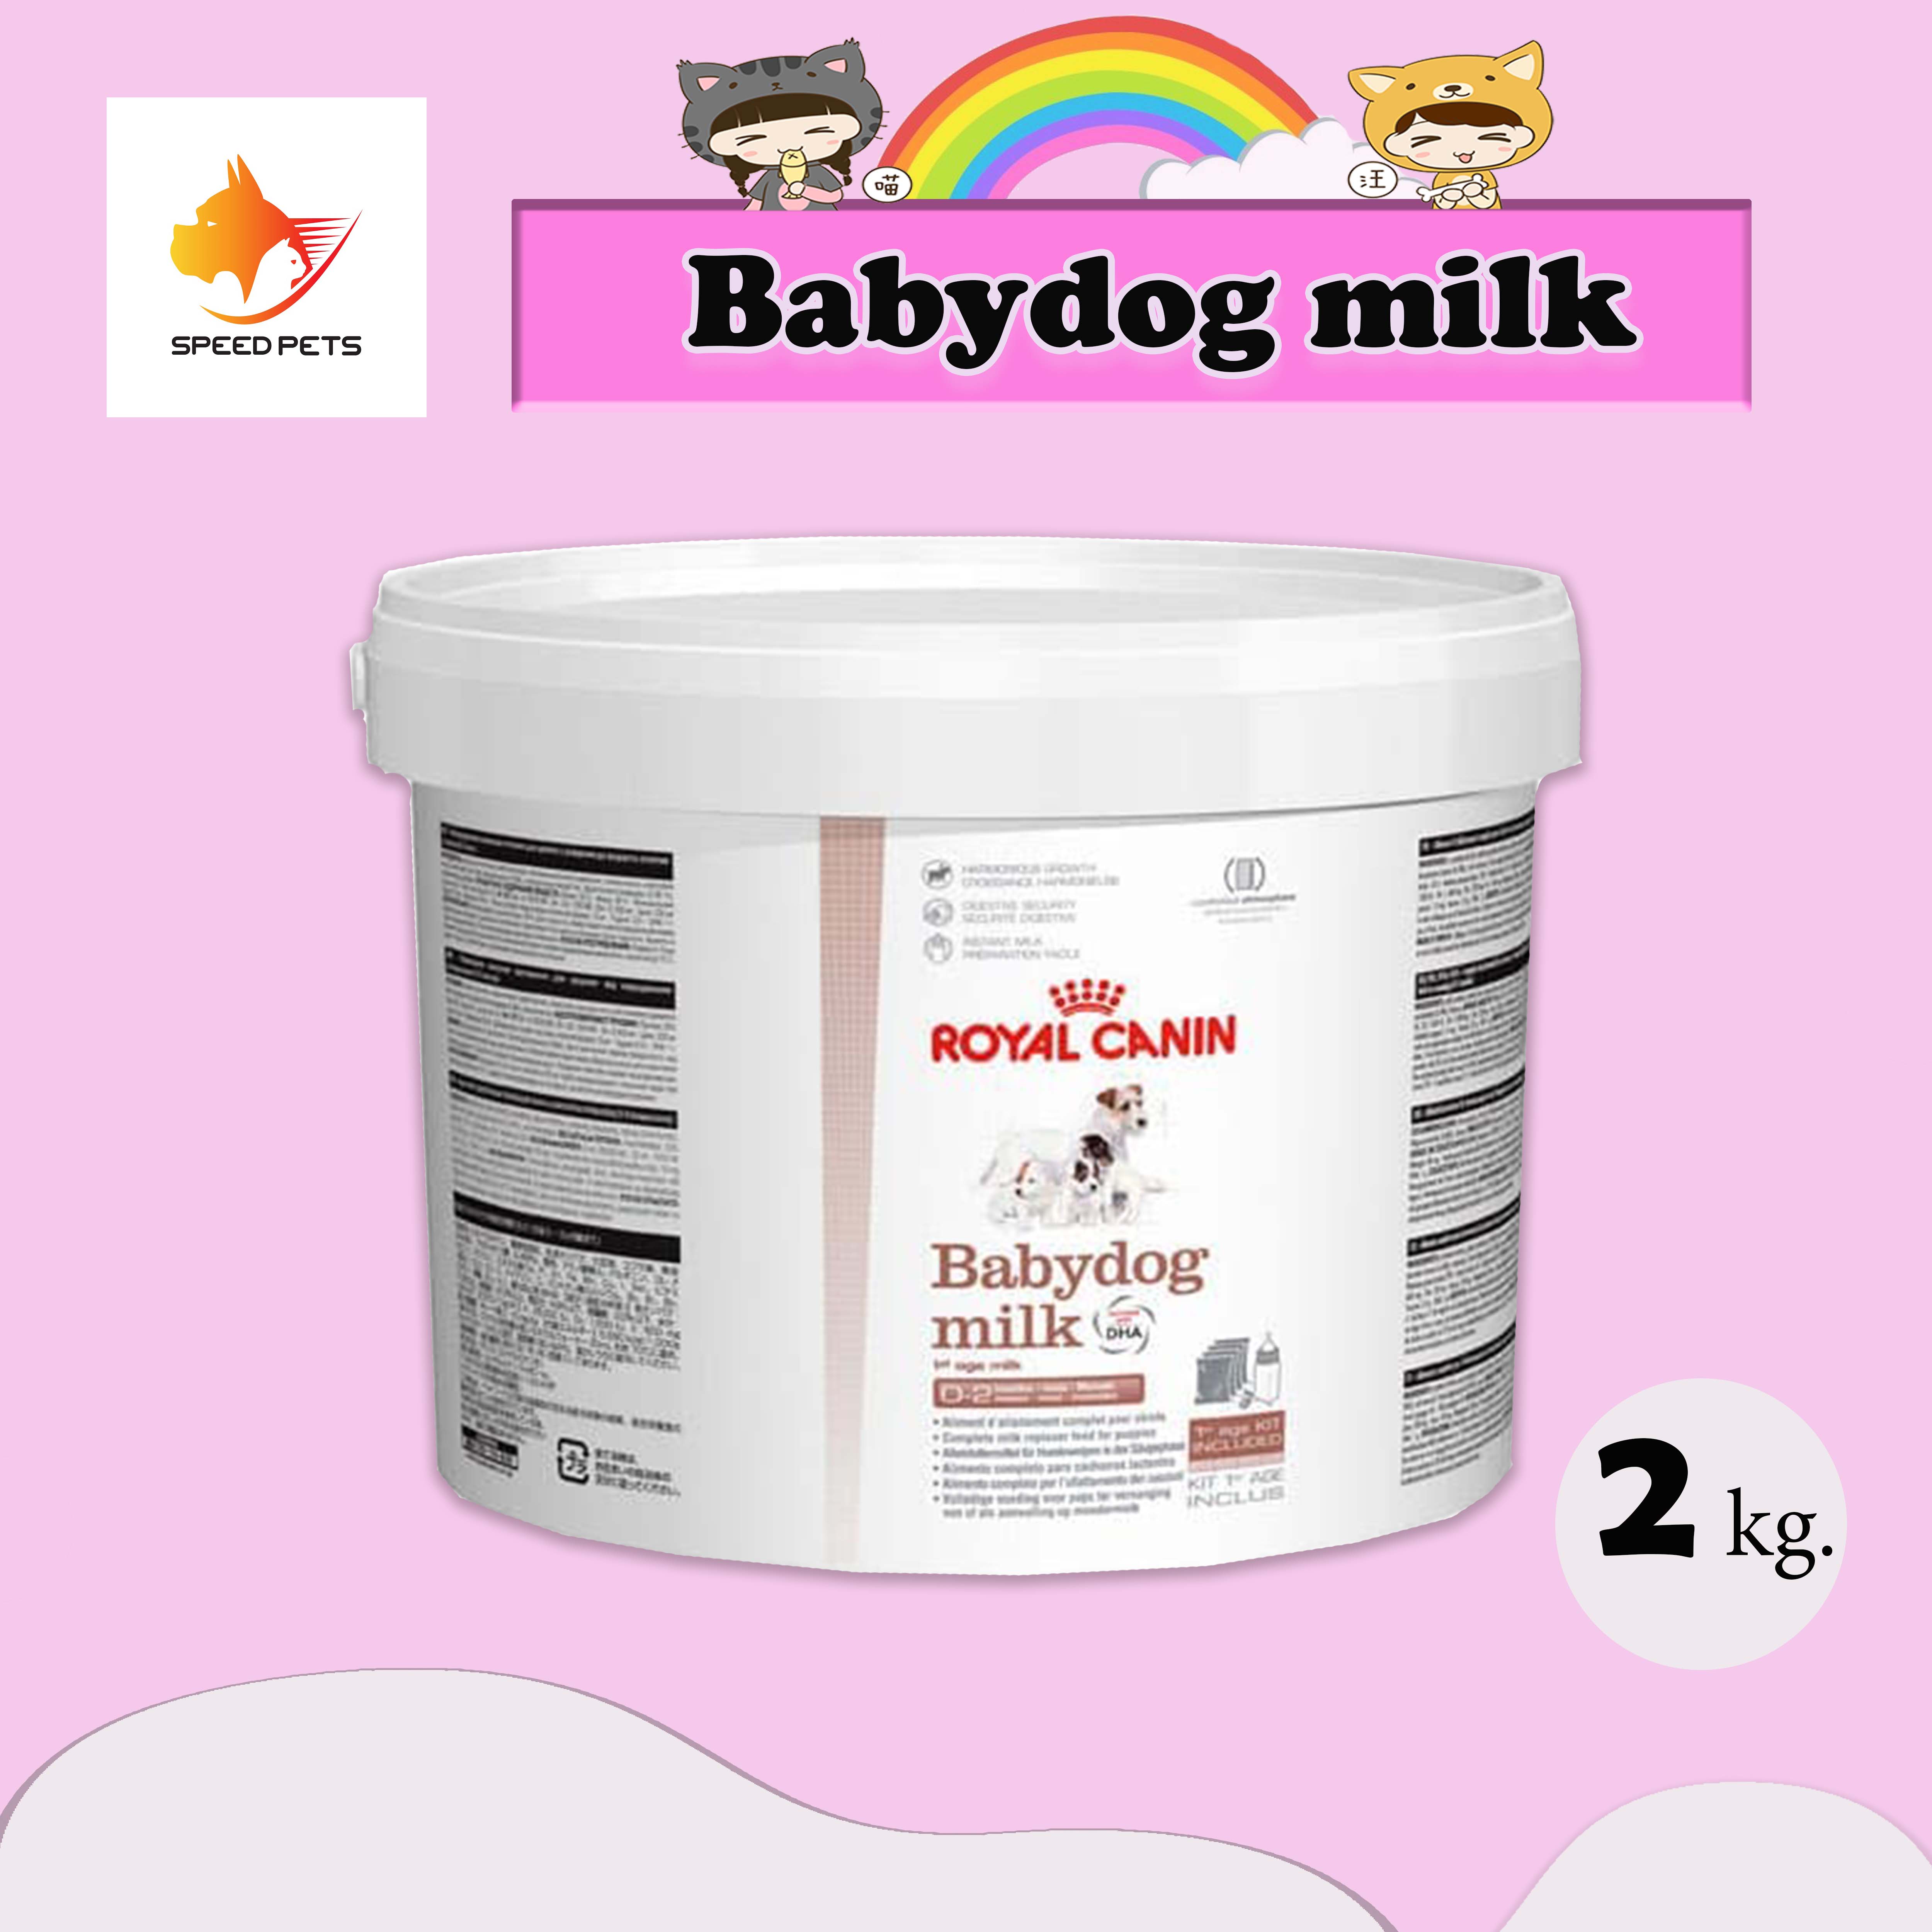 Royal Canin Babydog milk 2kg โรยัล คานิน นมลูกสุนัข นมผง แบบผง ลูกสุนัข 0 - 2 เดือน 2 กก